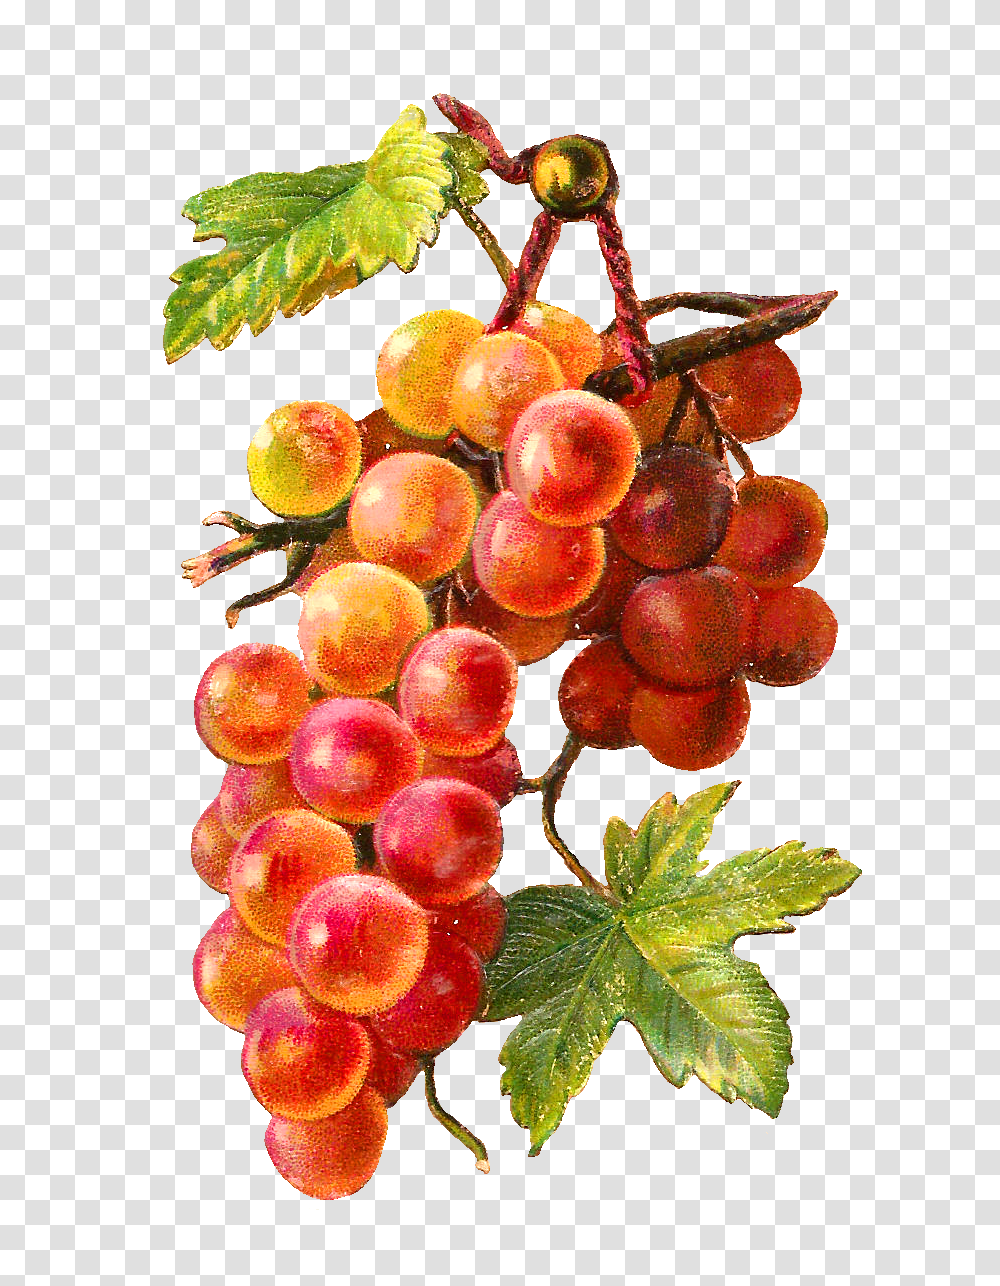 Grapes Fruit Clip Art Grape Image Free Picture Download, Plant, Food, Pineapple Transparent Png